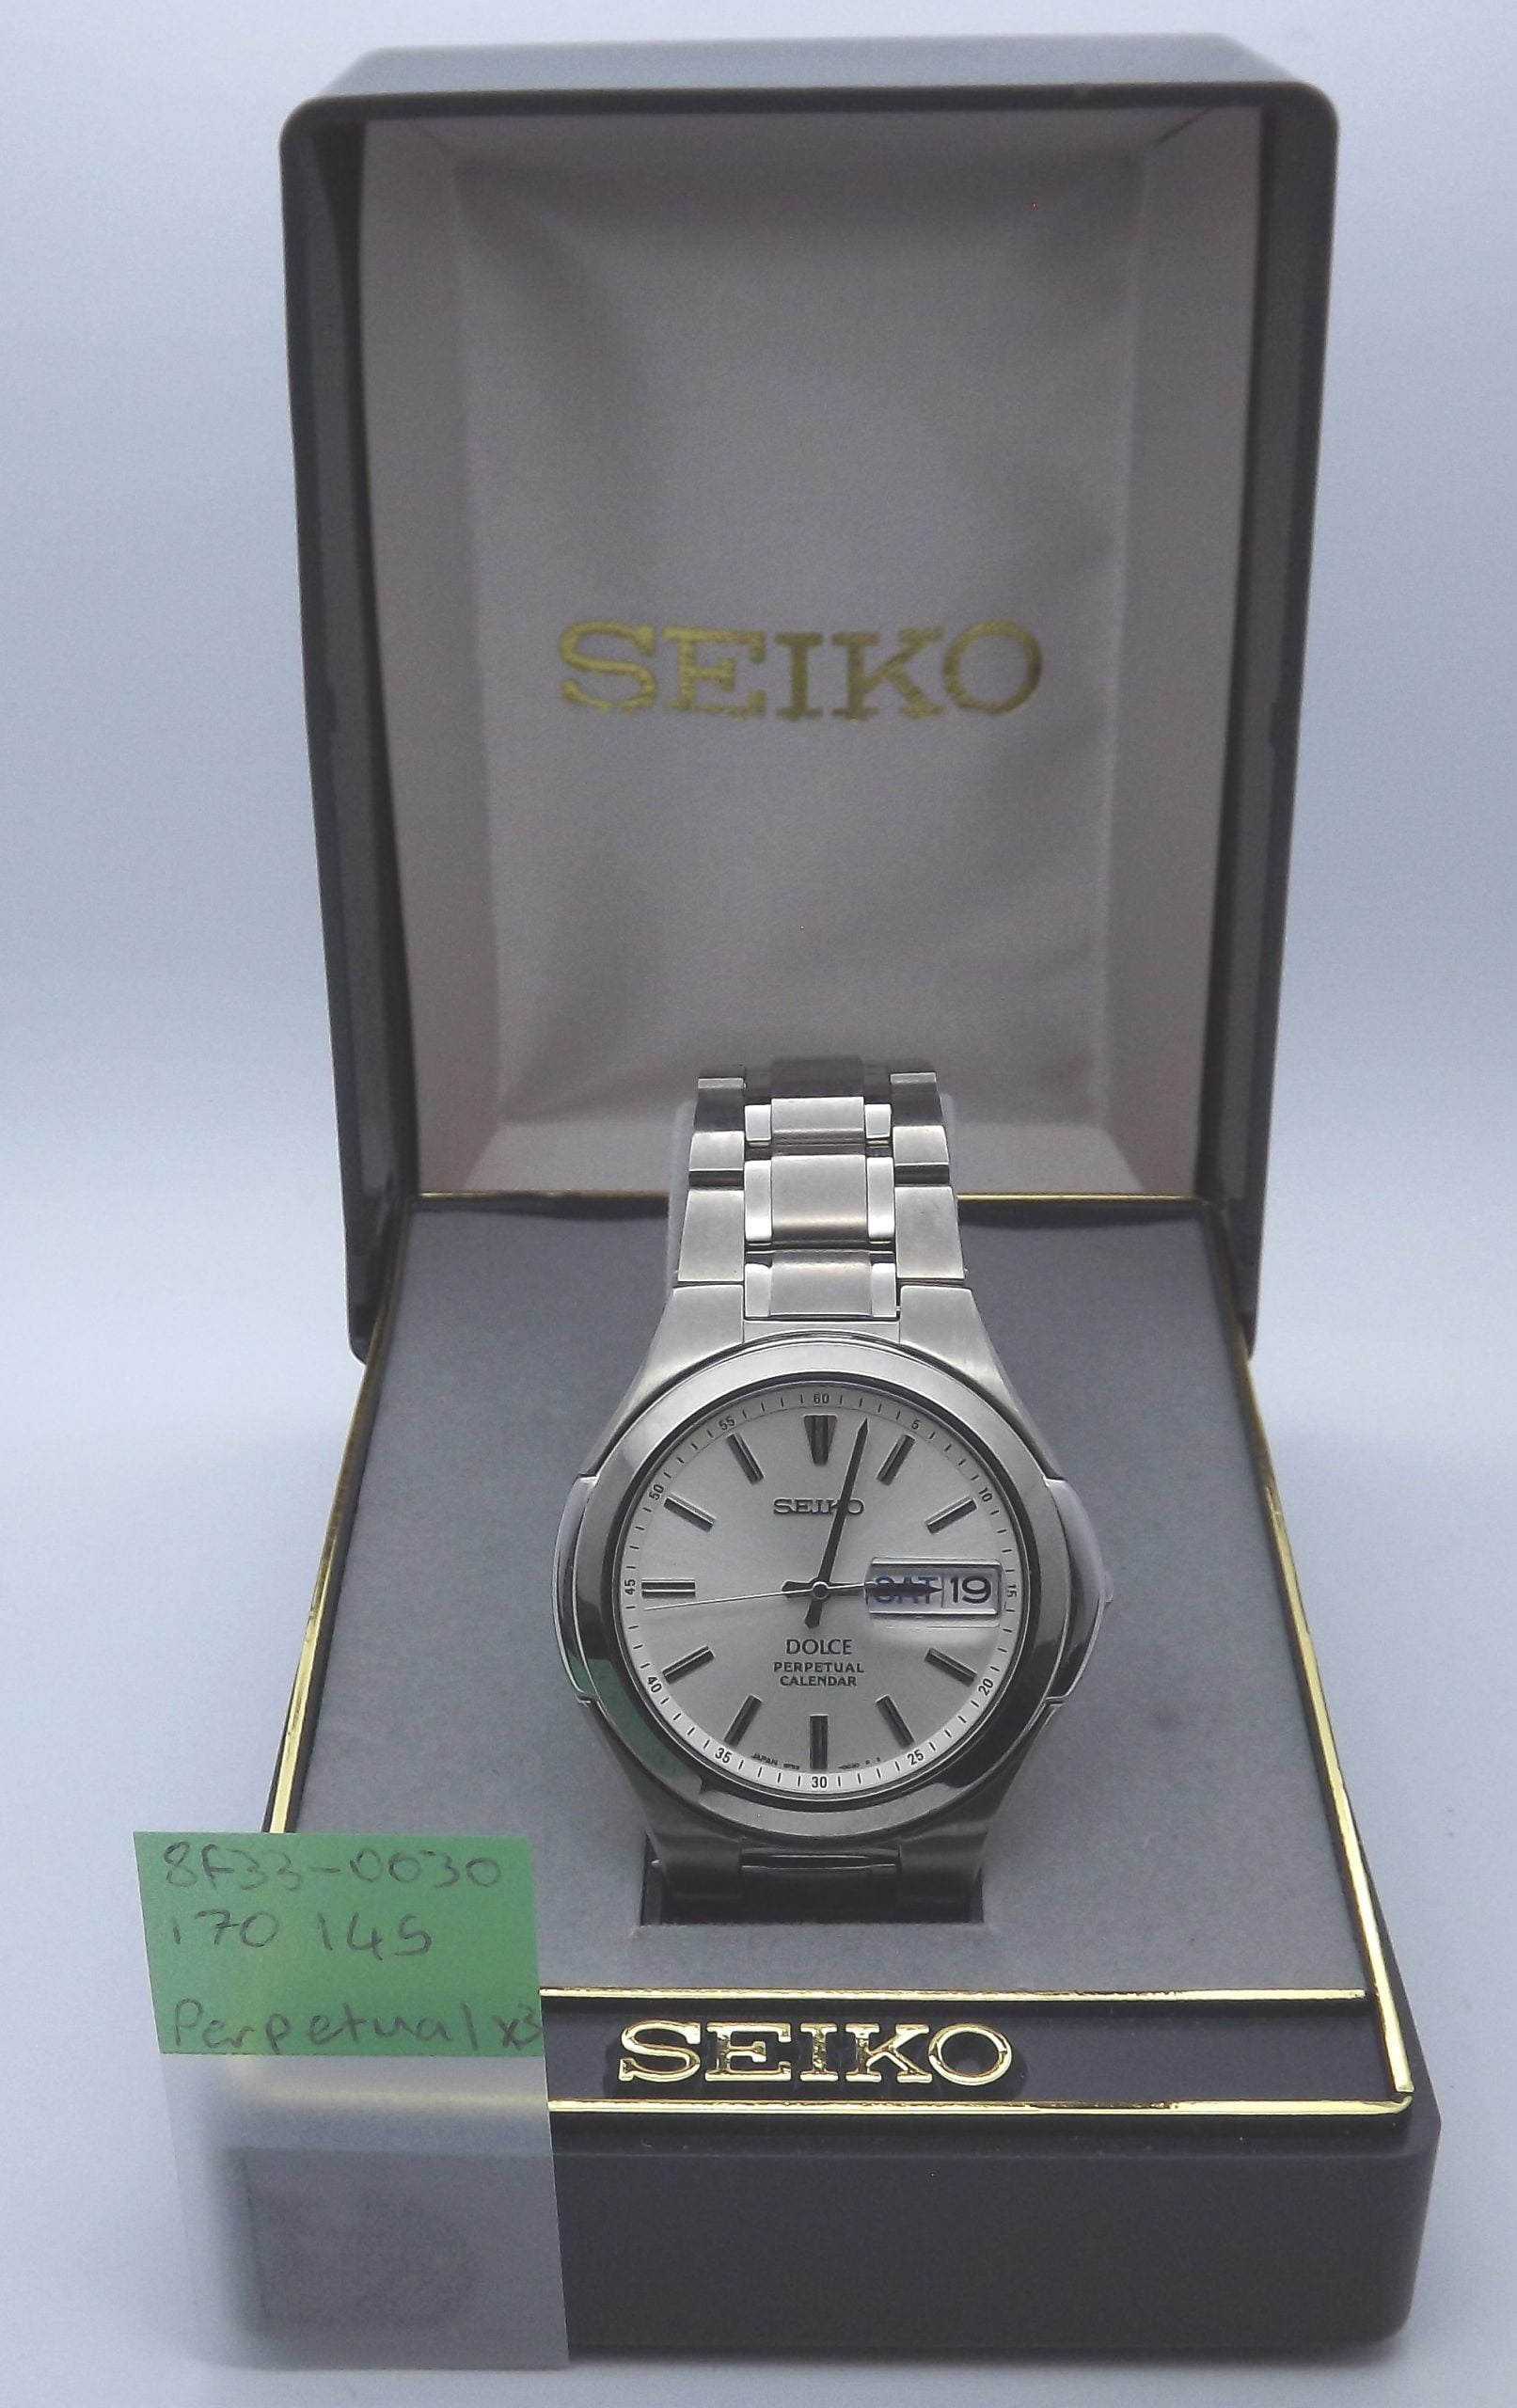 8F33-0030 – Seiko Works